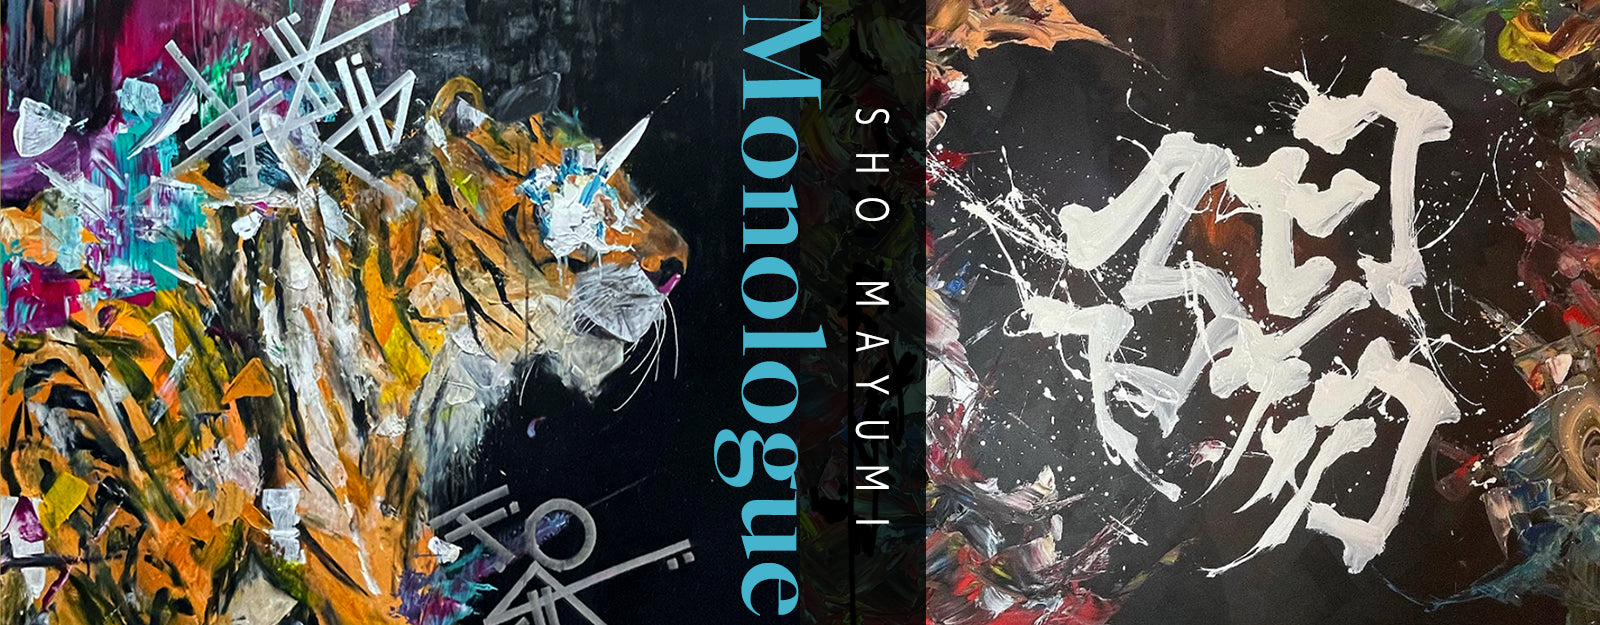 Monologue, a Solo Exhibition by Sho Mayumi